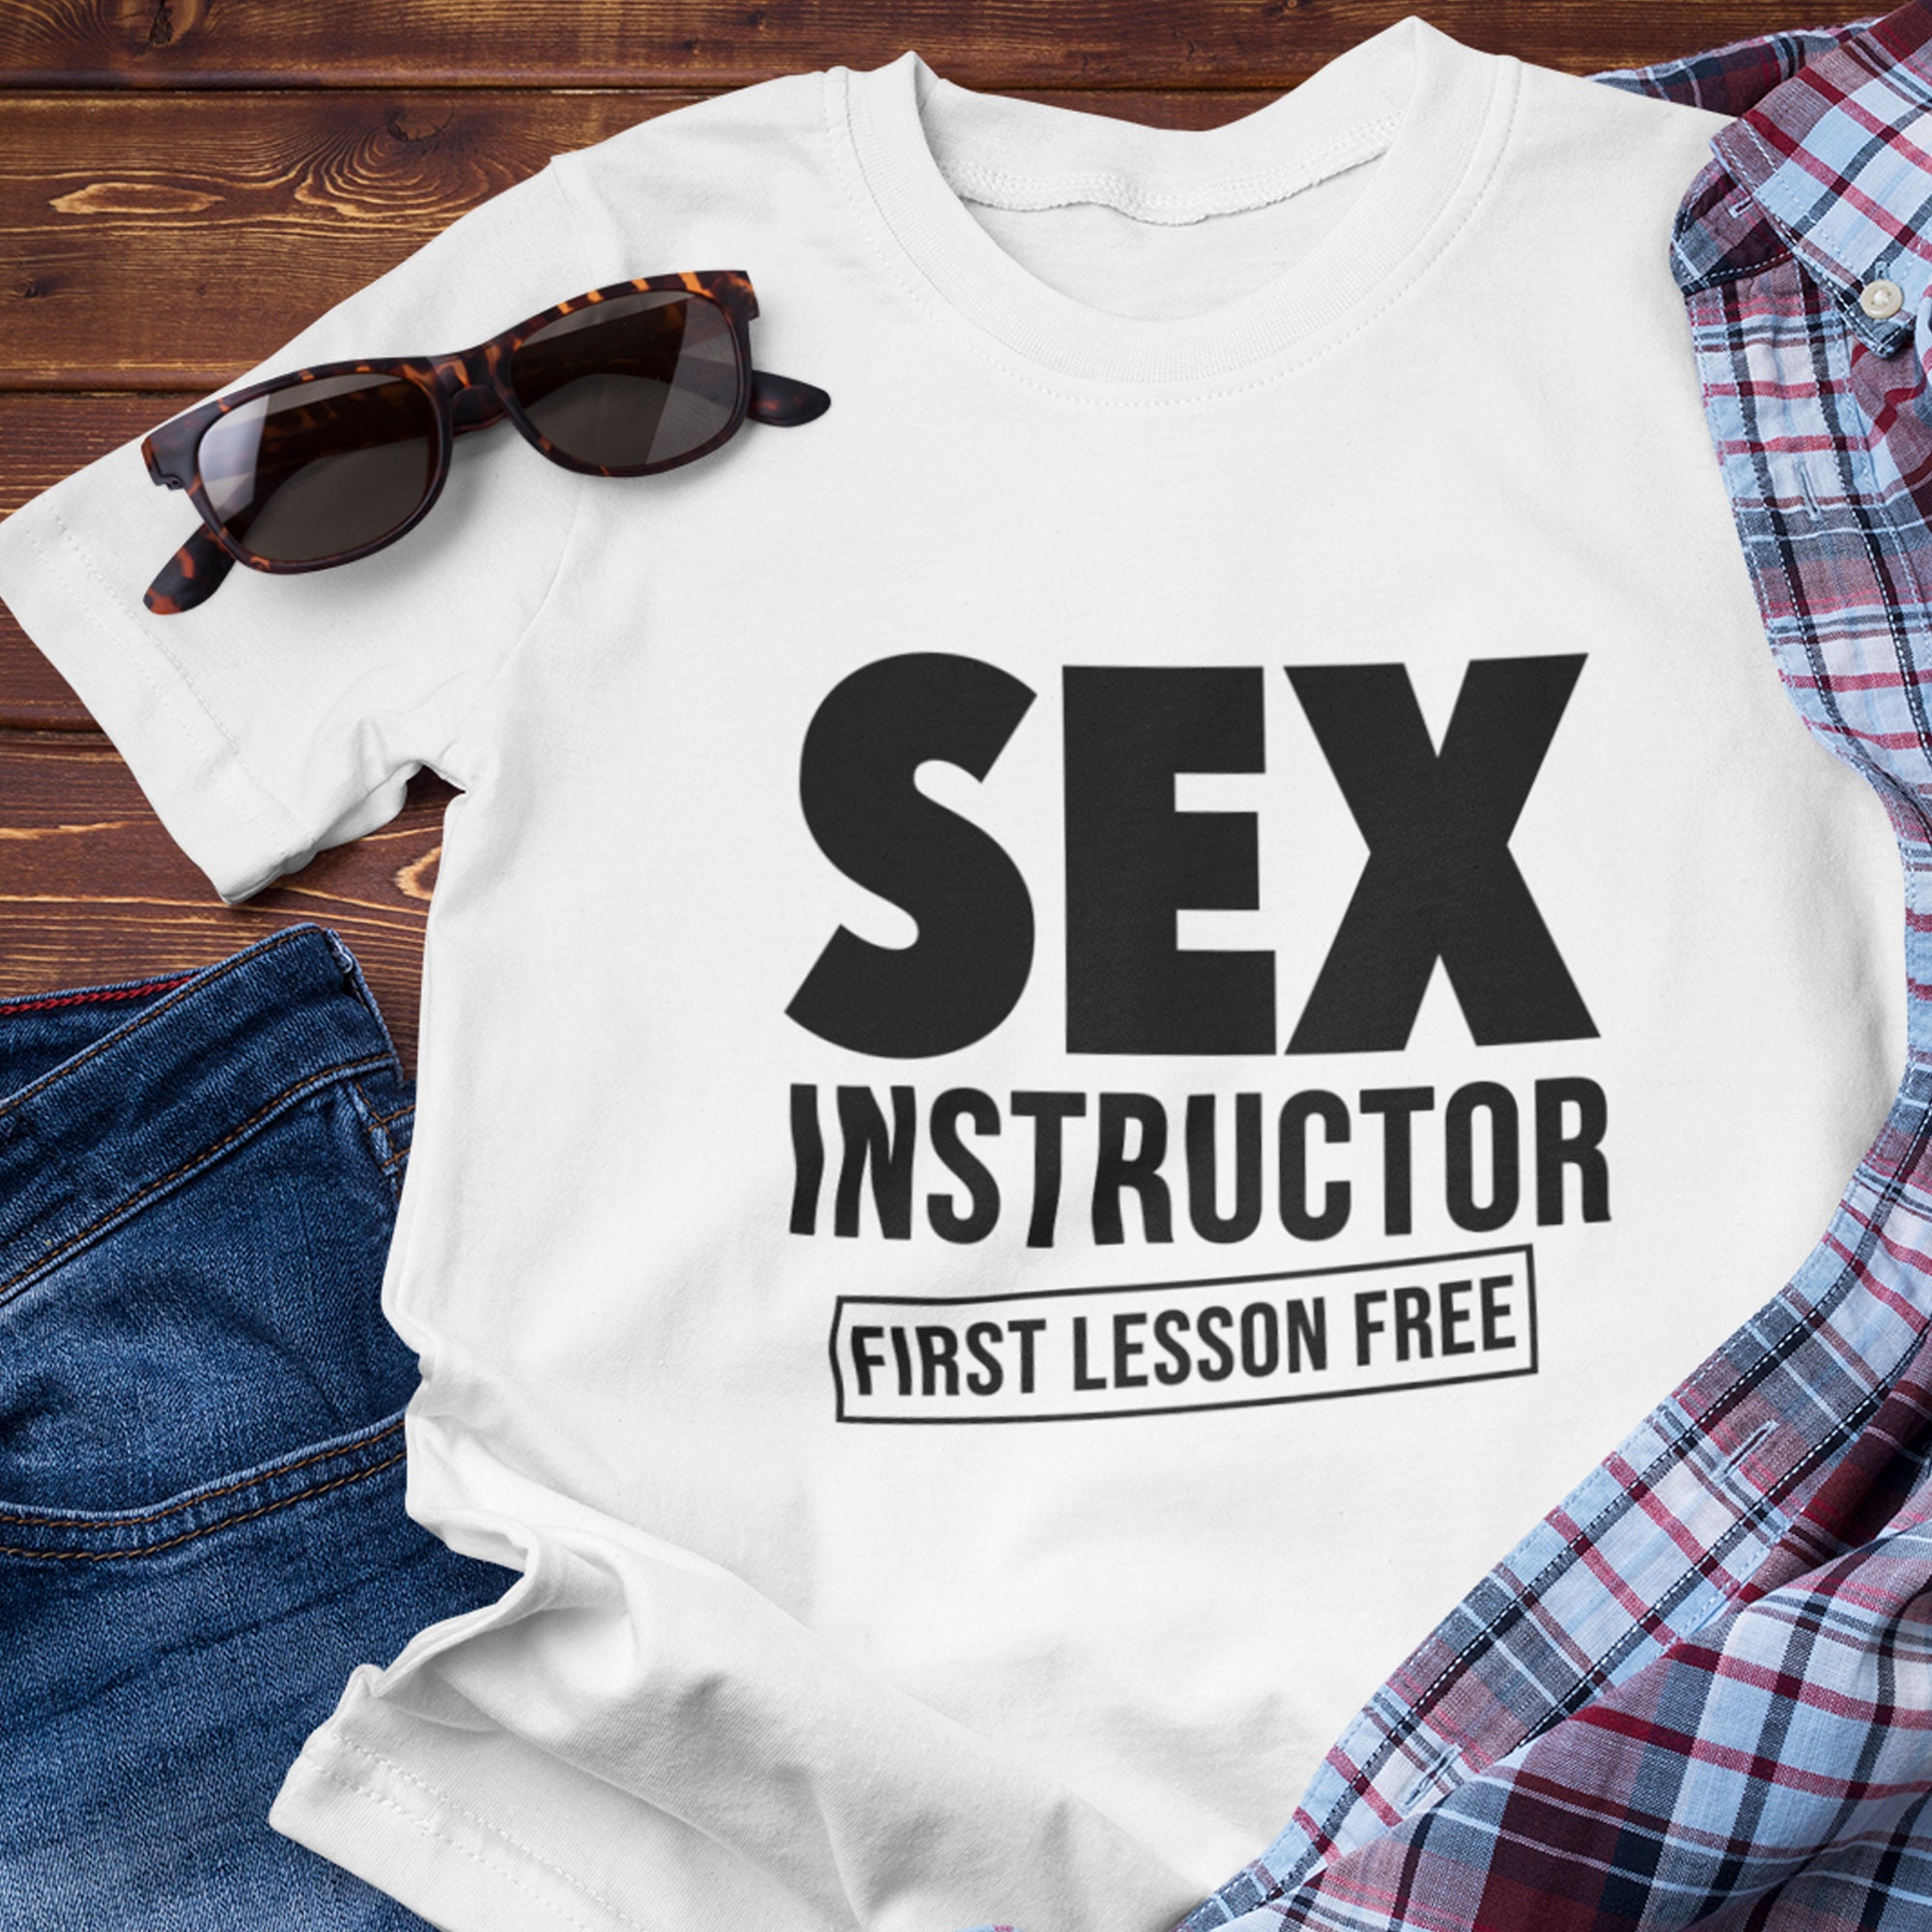 Funny Sex Shirts